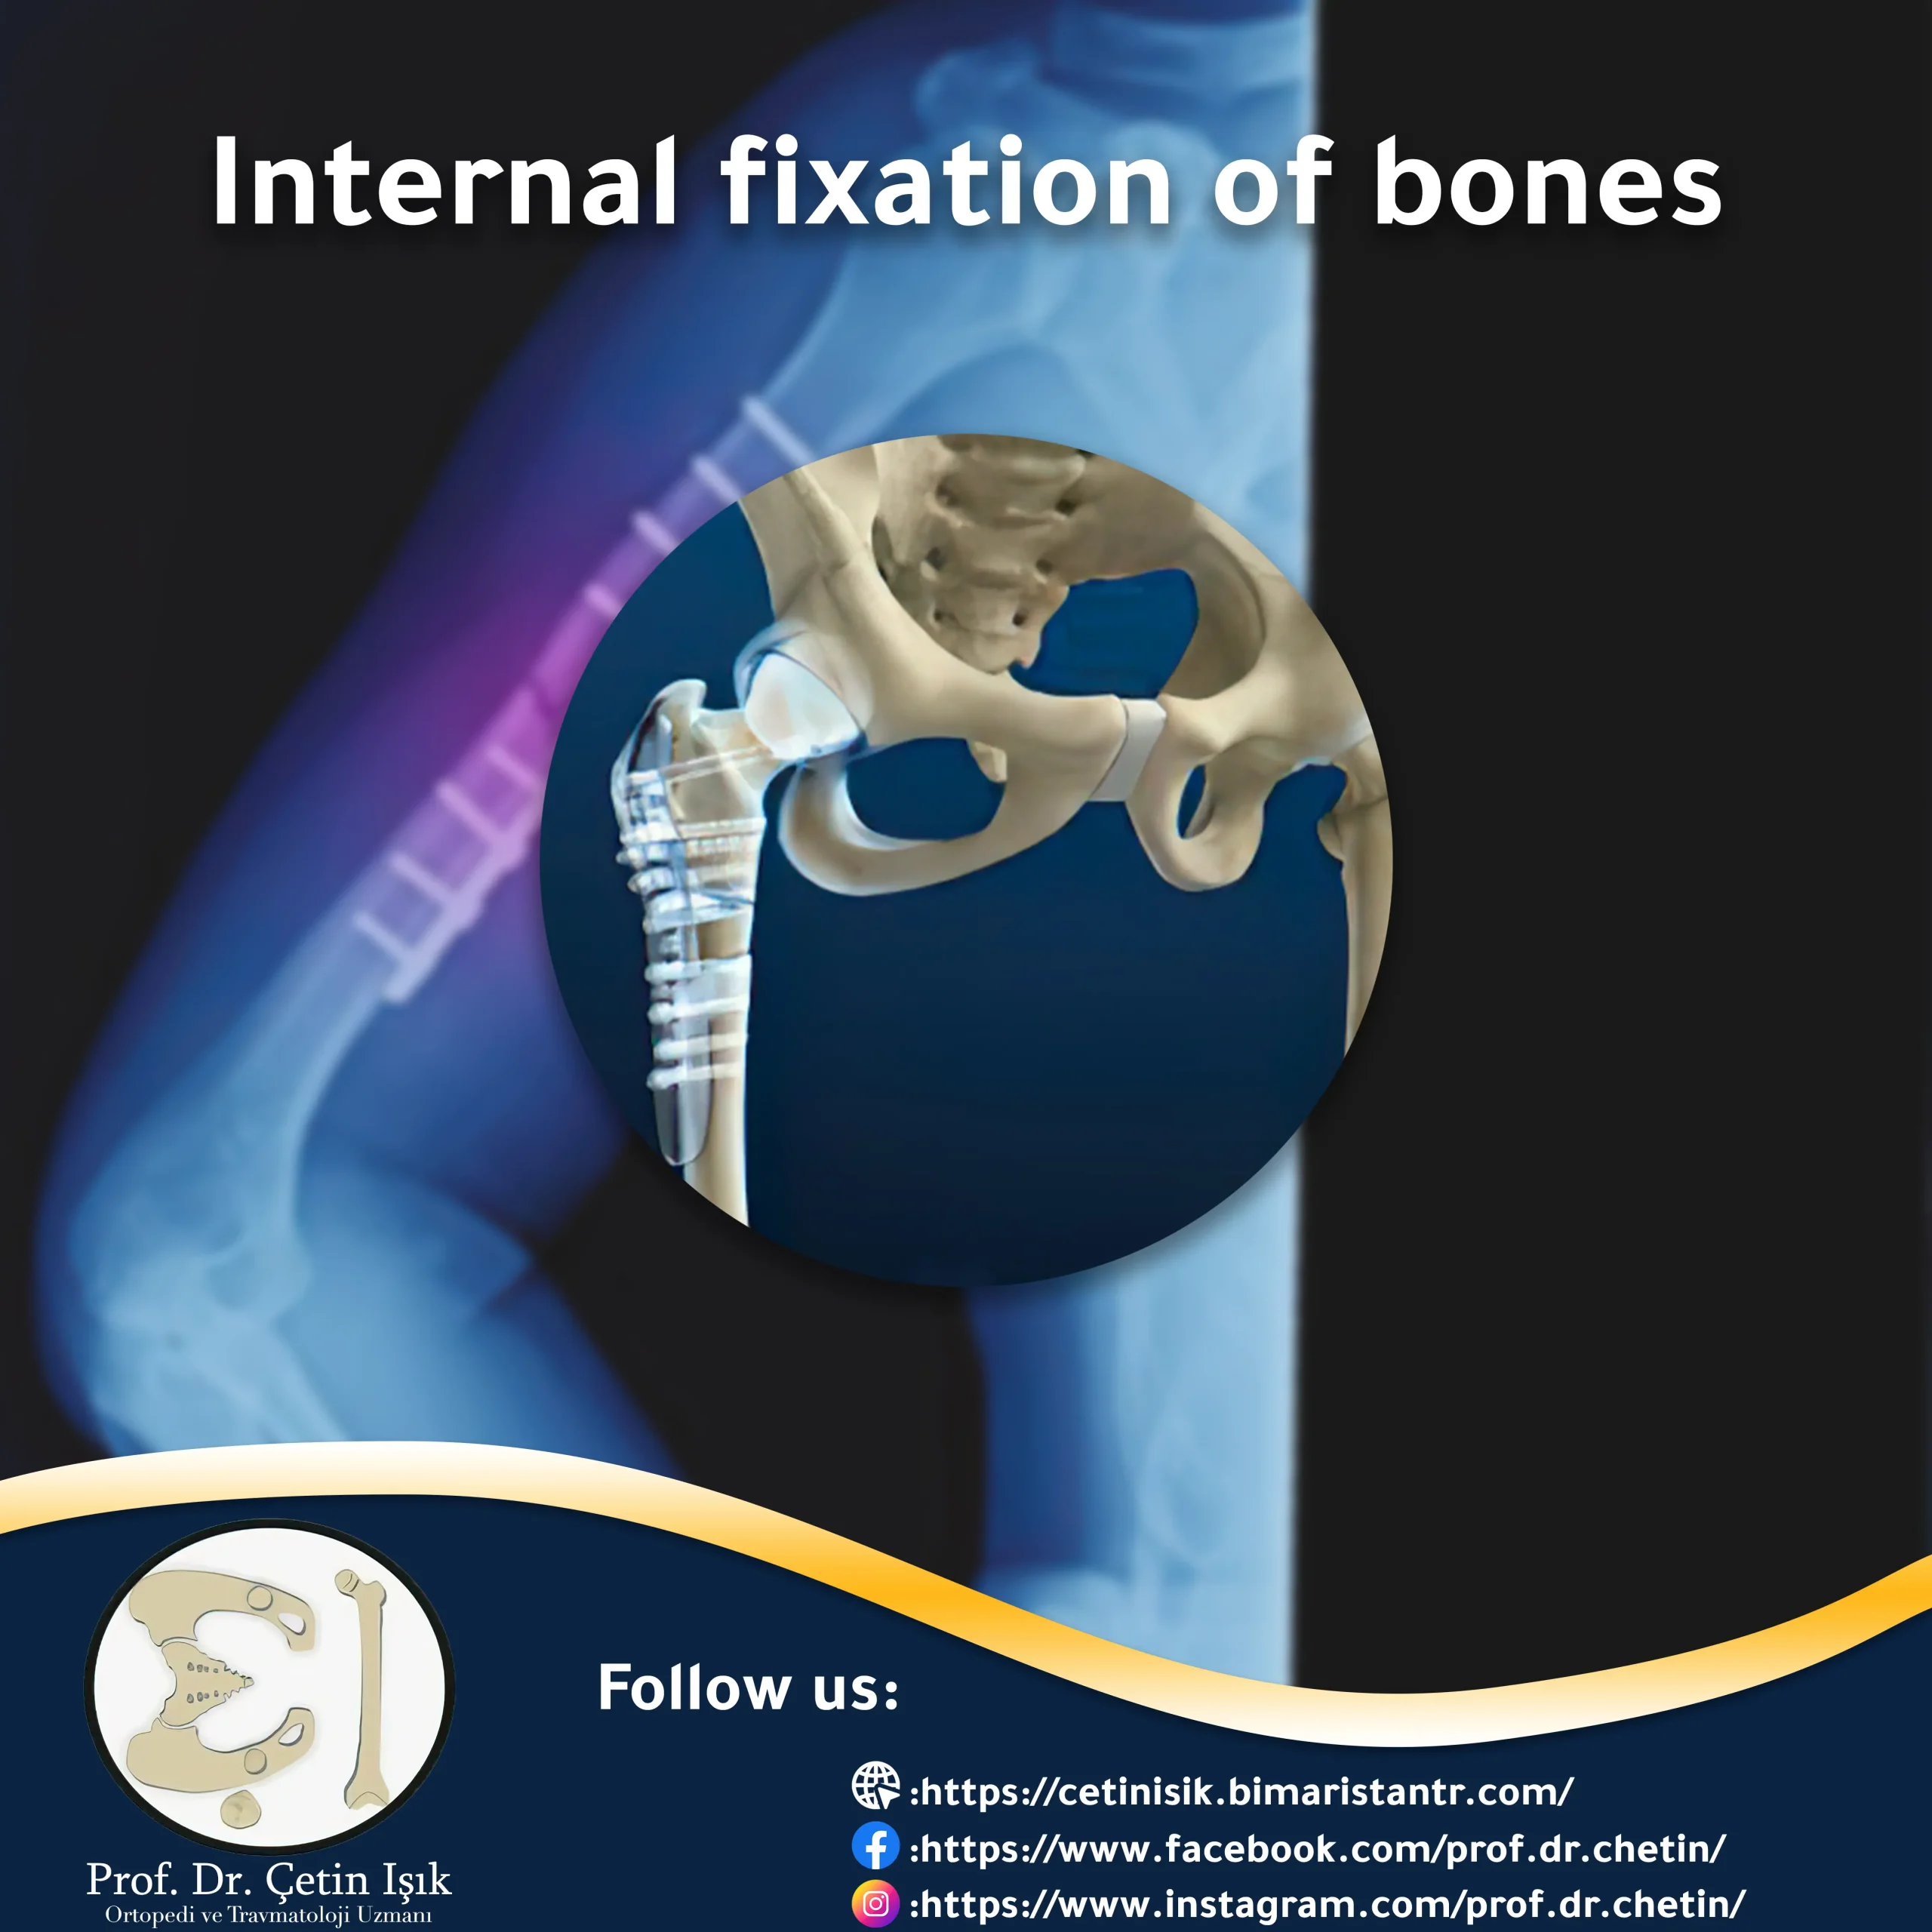 Internal fixation of bones to treat fractures